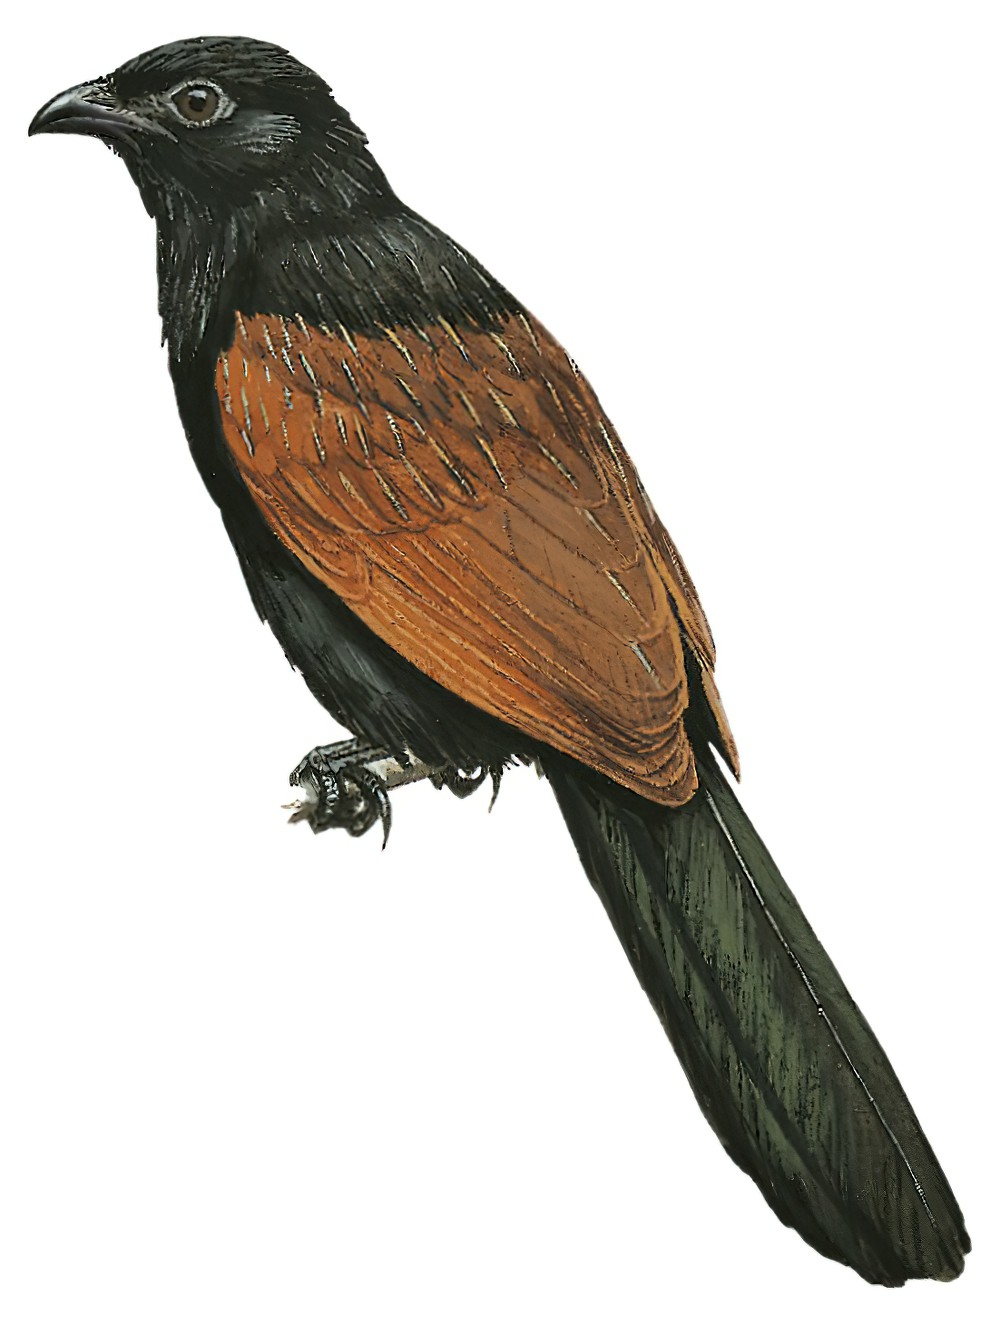 Lesser Coucal / Centropus bengalensis